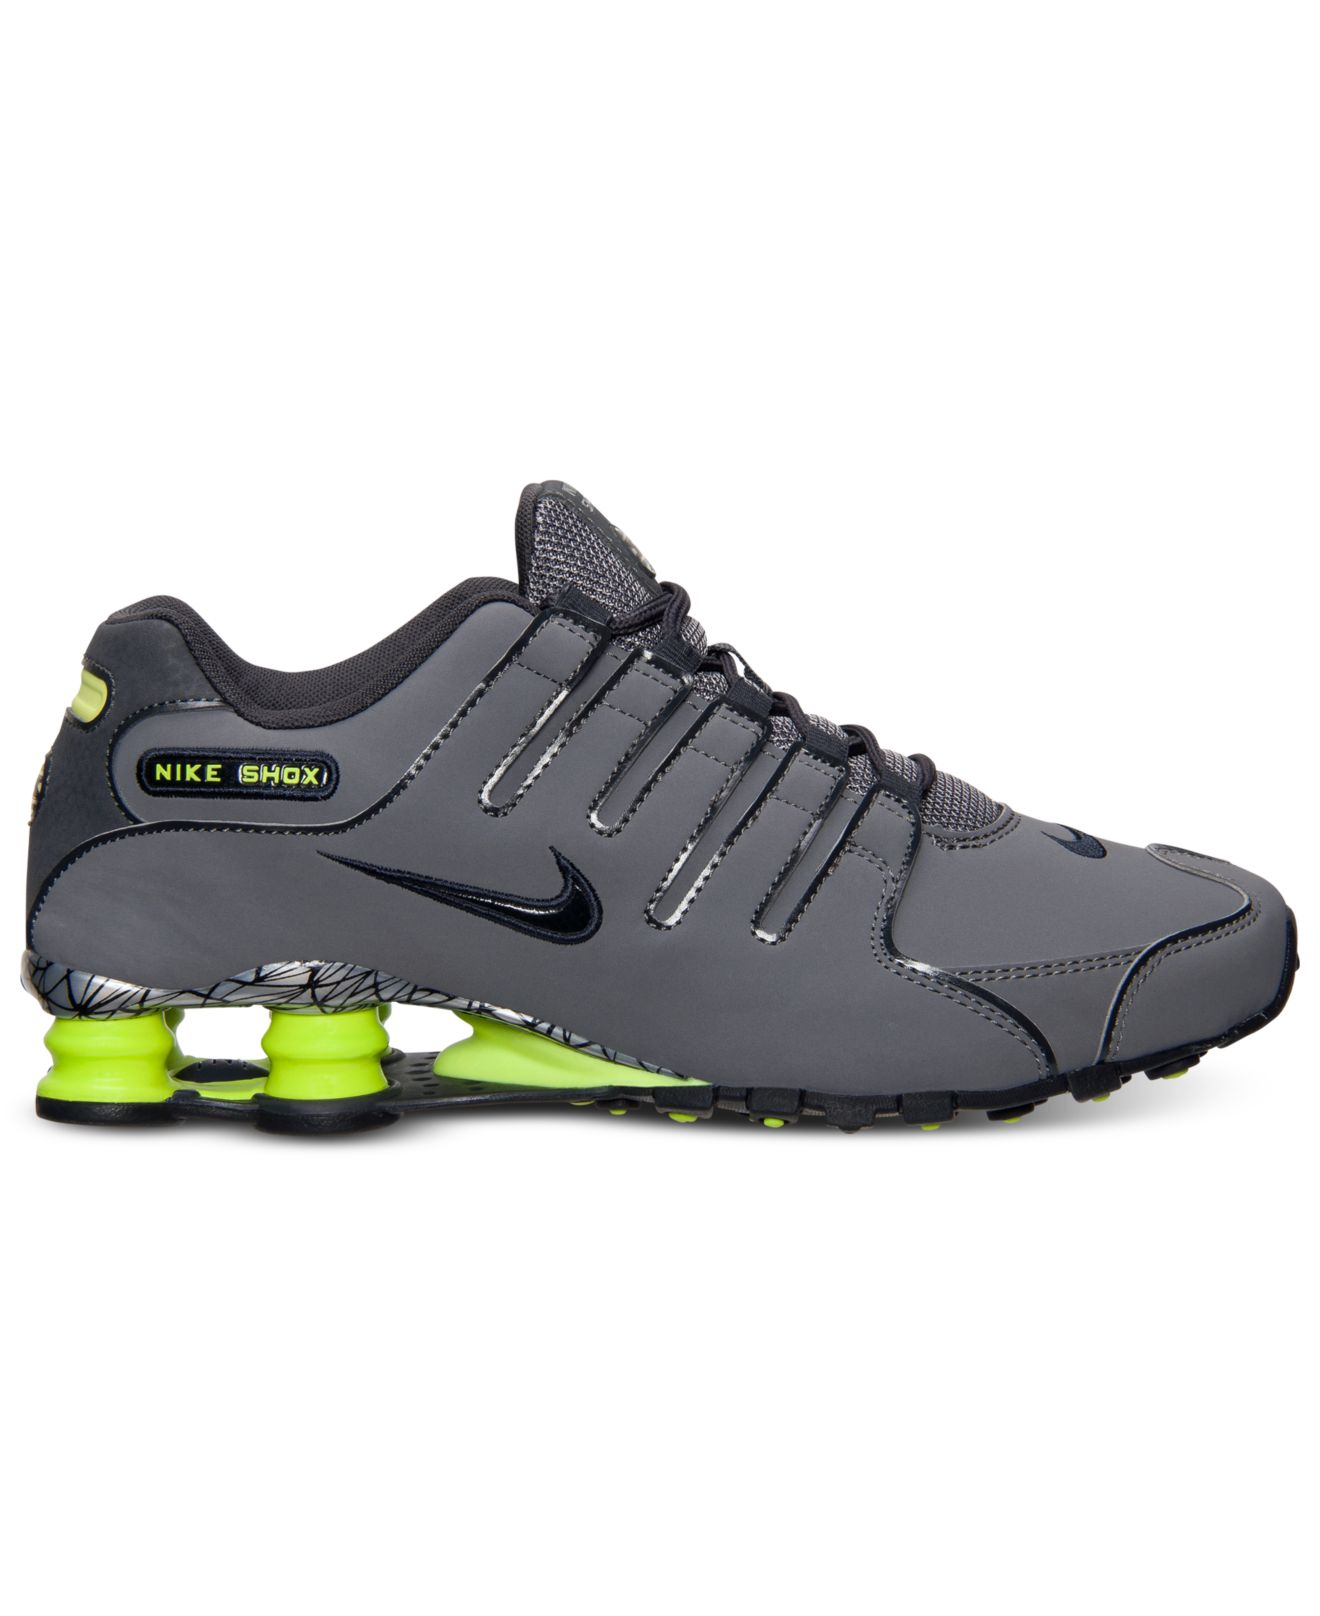 Lyst - Nike Men'S Shox Nz Eu Running Sneakers From Finish Line in Gray ...